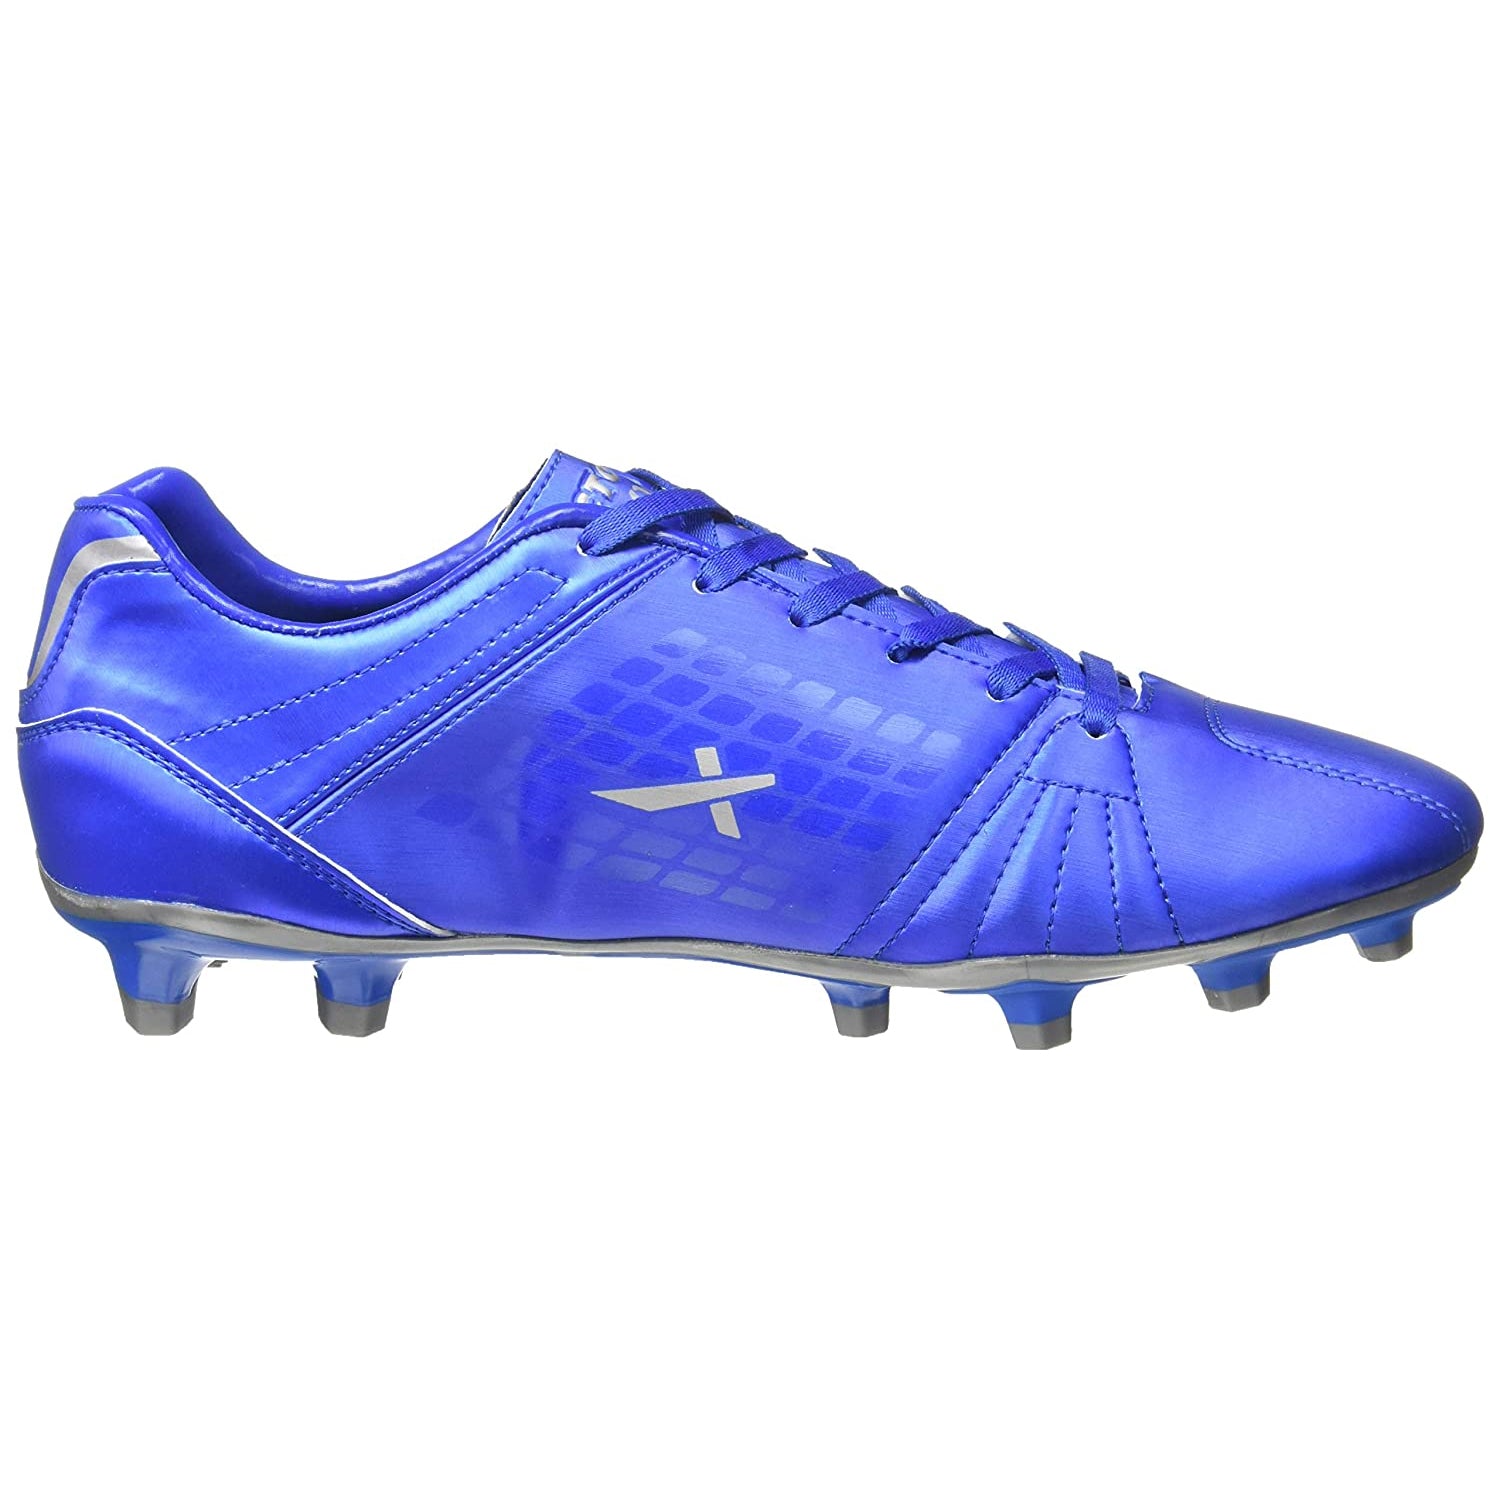 Vector X Velocity Football Shoes, Adult Black/Silver - Best Price online Prokicksports.com